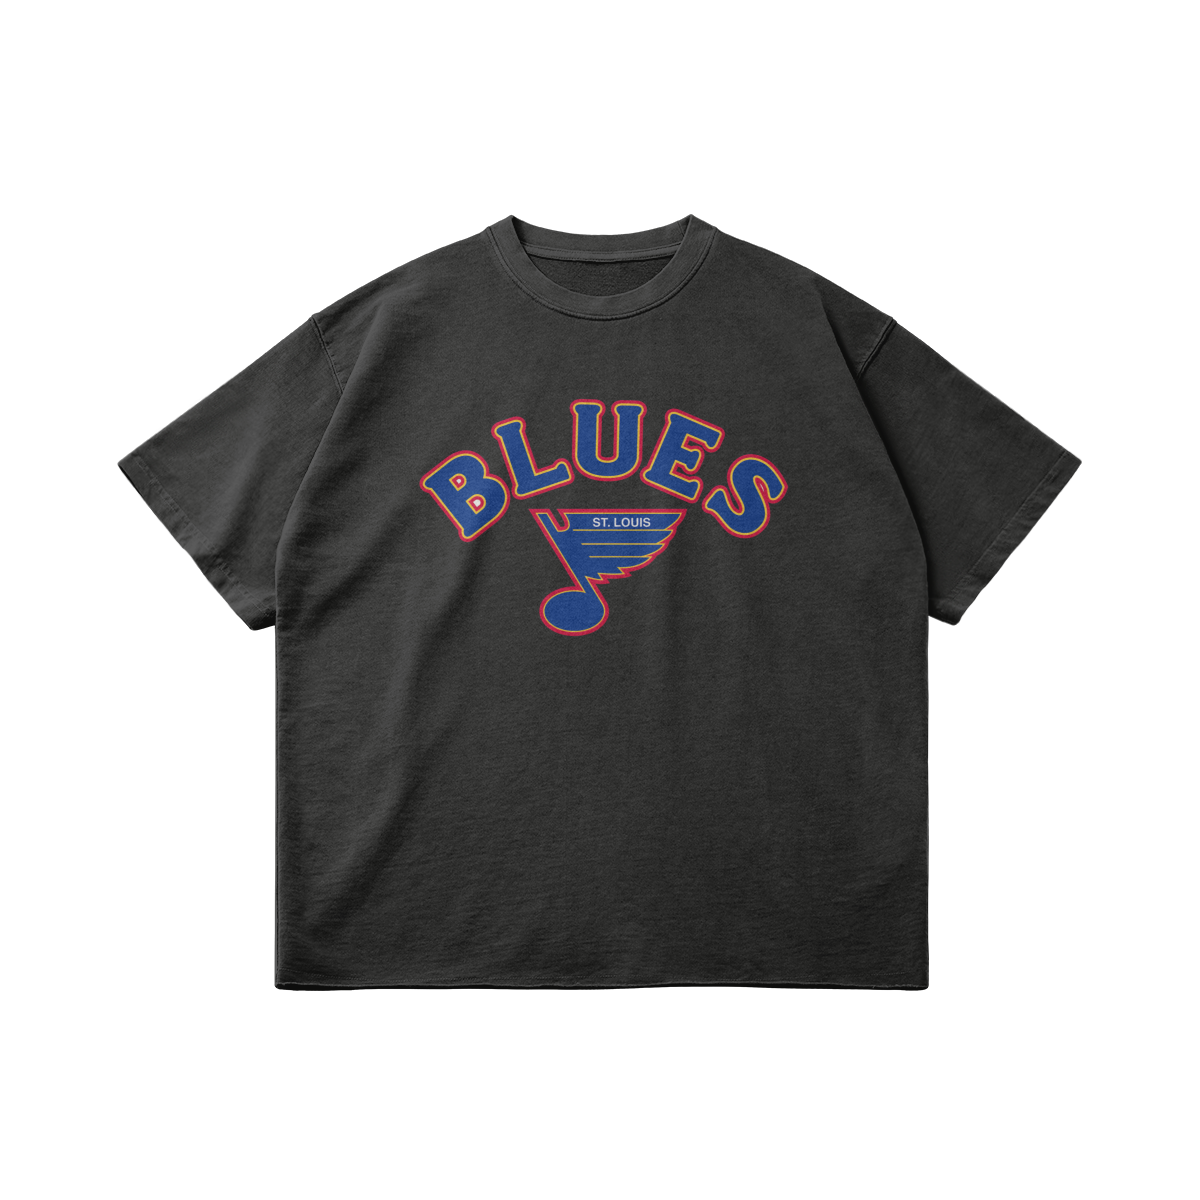 Vintage St. Louis Blues Tee